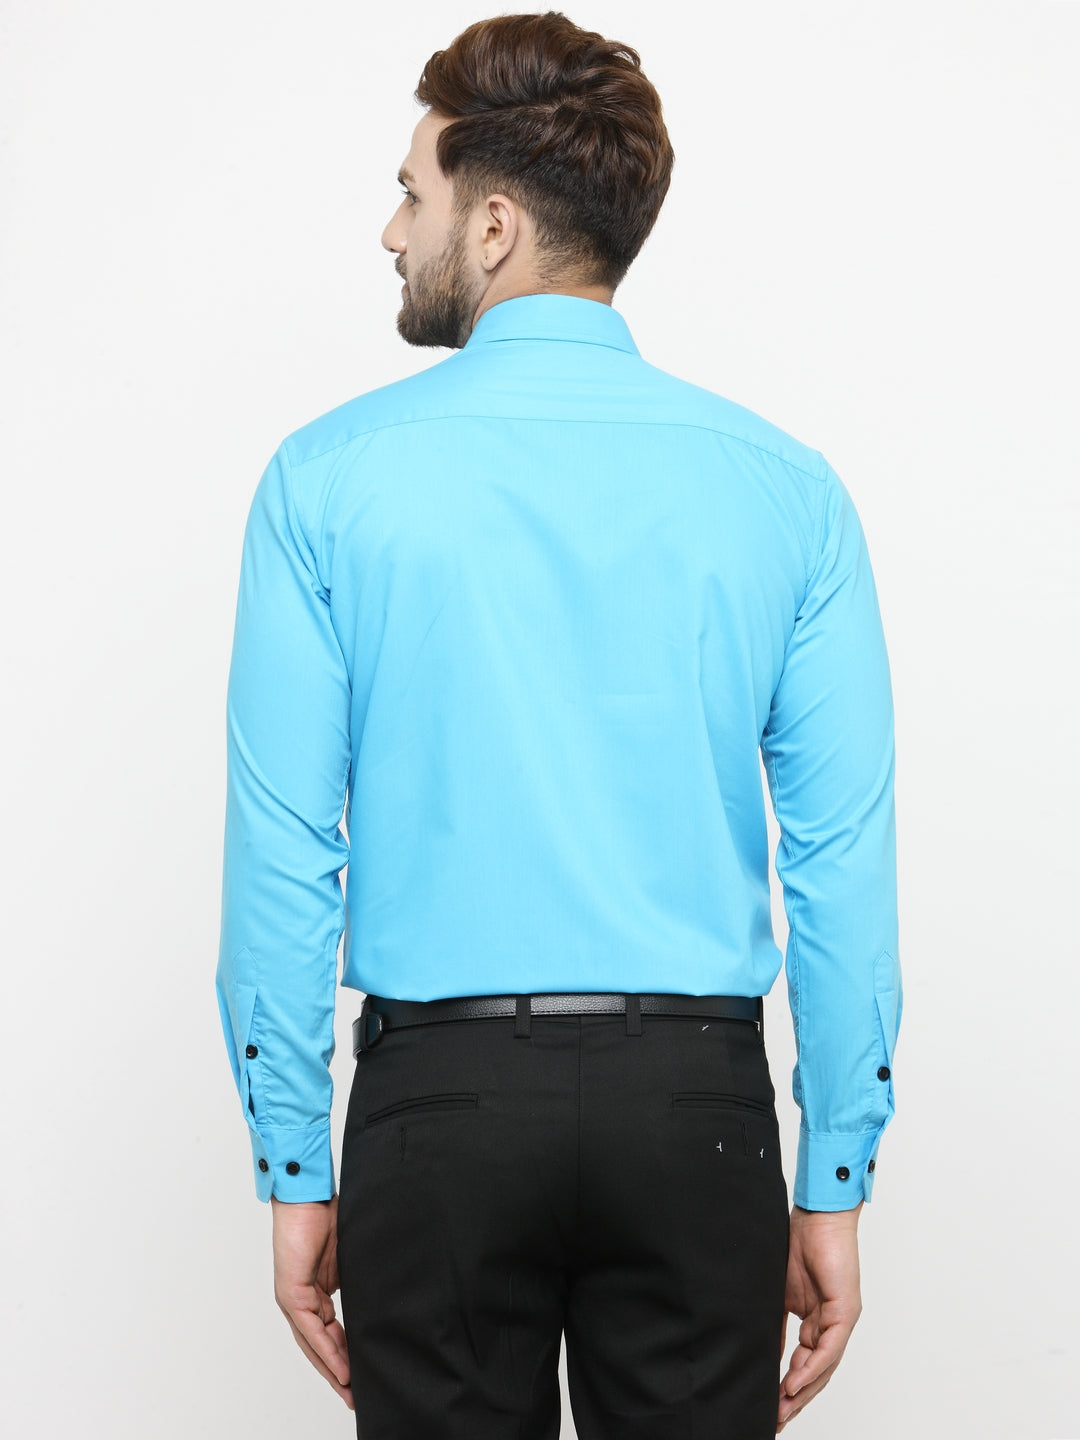 Men's Sky Blue Formal Shirt with black detailing ( SF 411Sky ) - Jainish